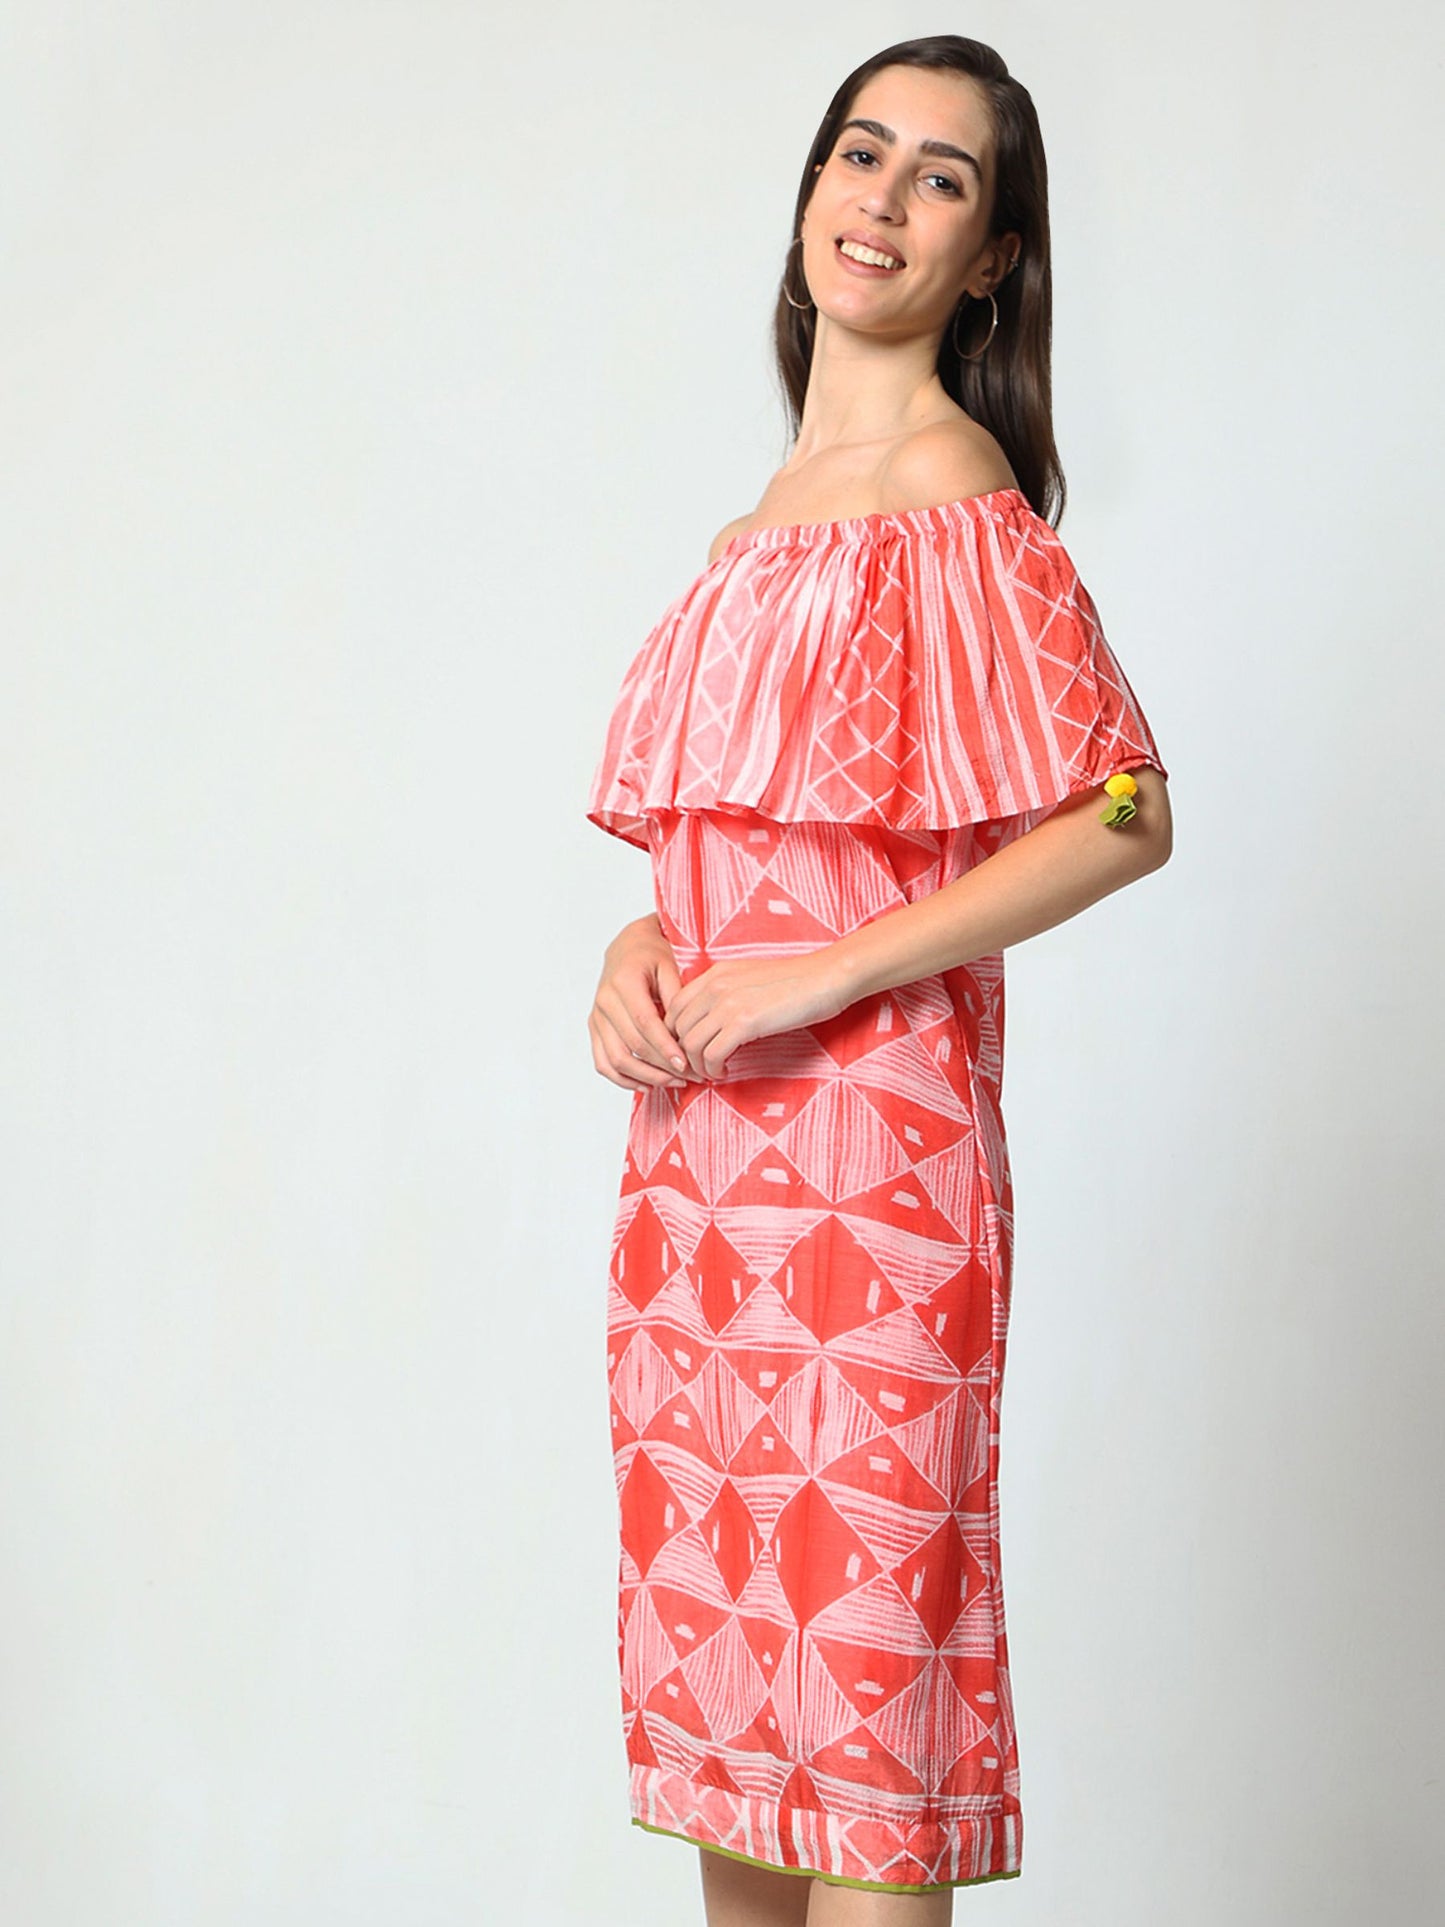 'Amber' Hand-dyed Shibori Vegan Silk Off-shoulder Dress